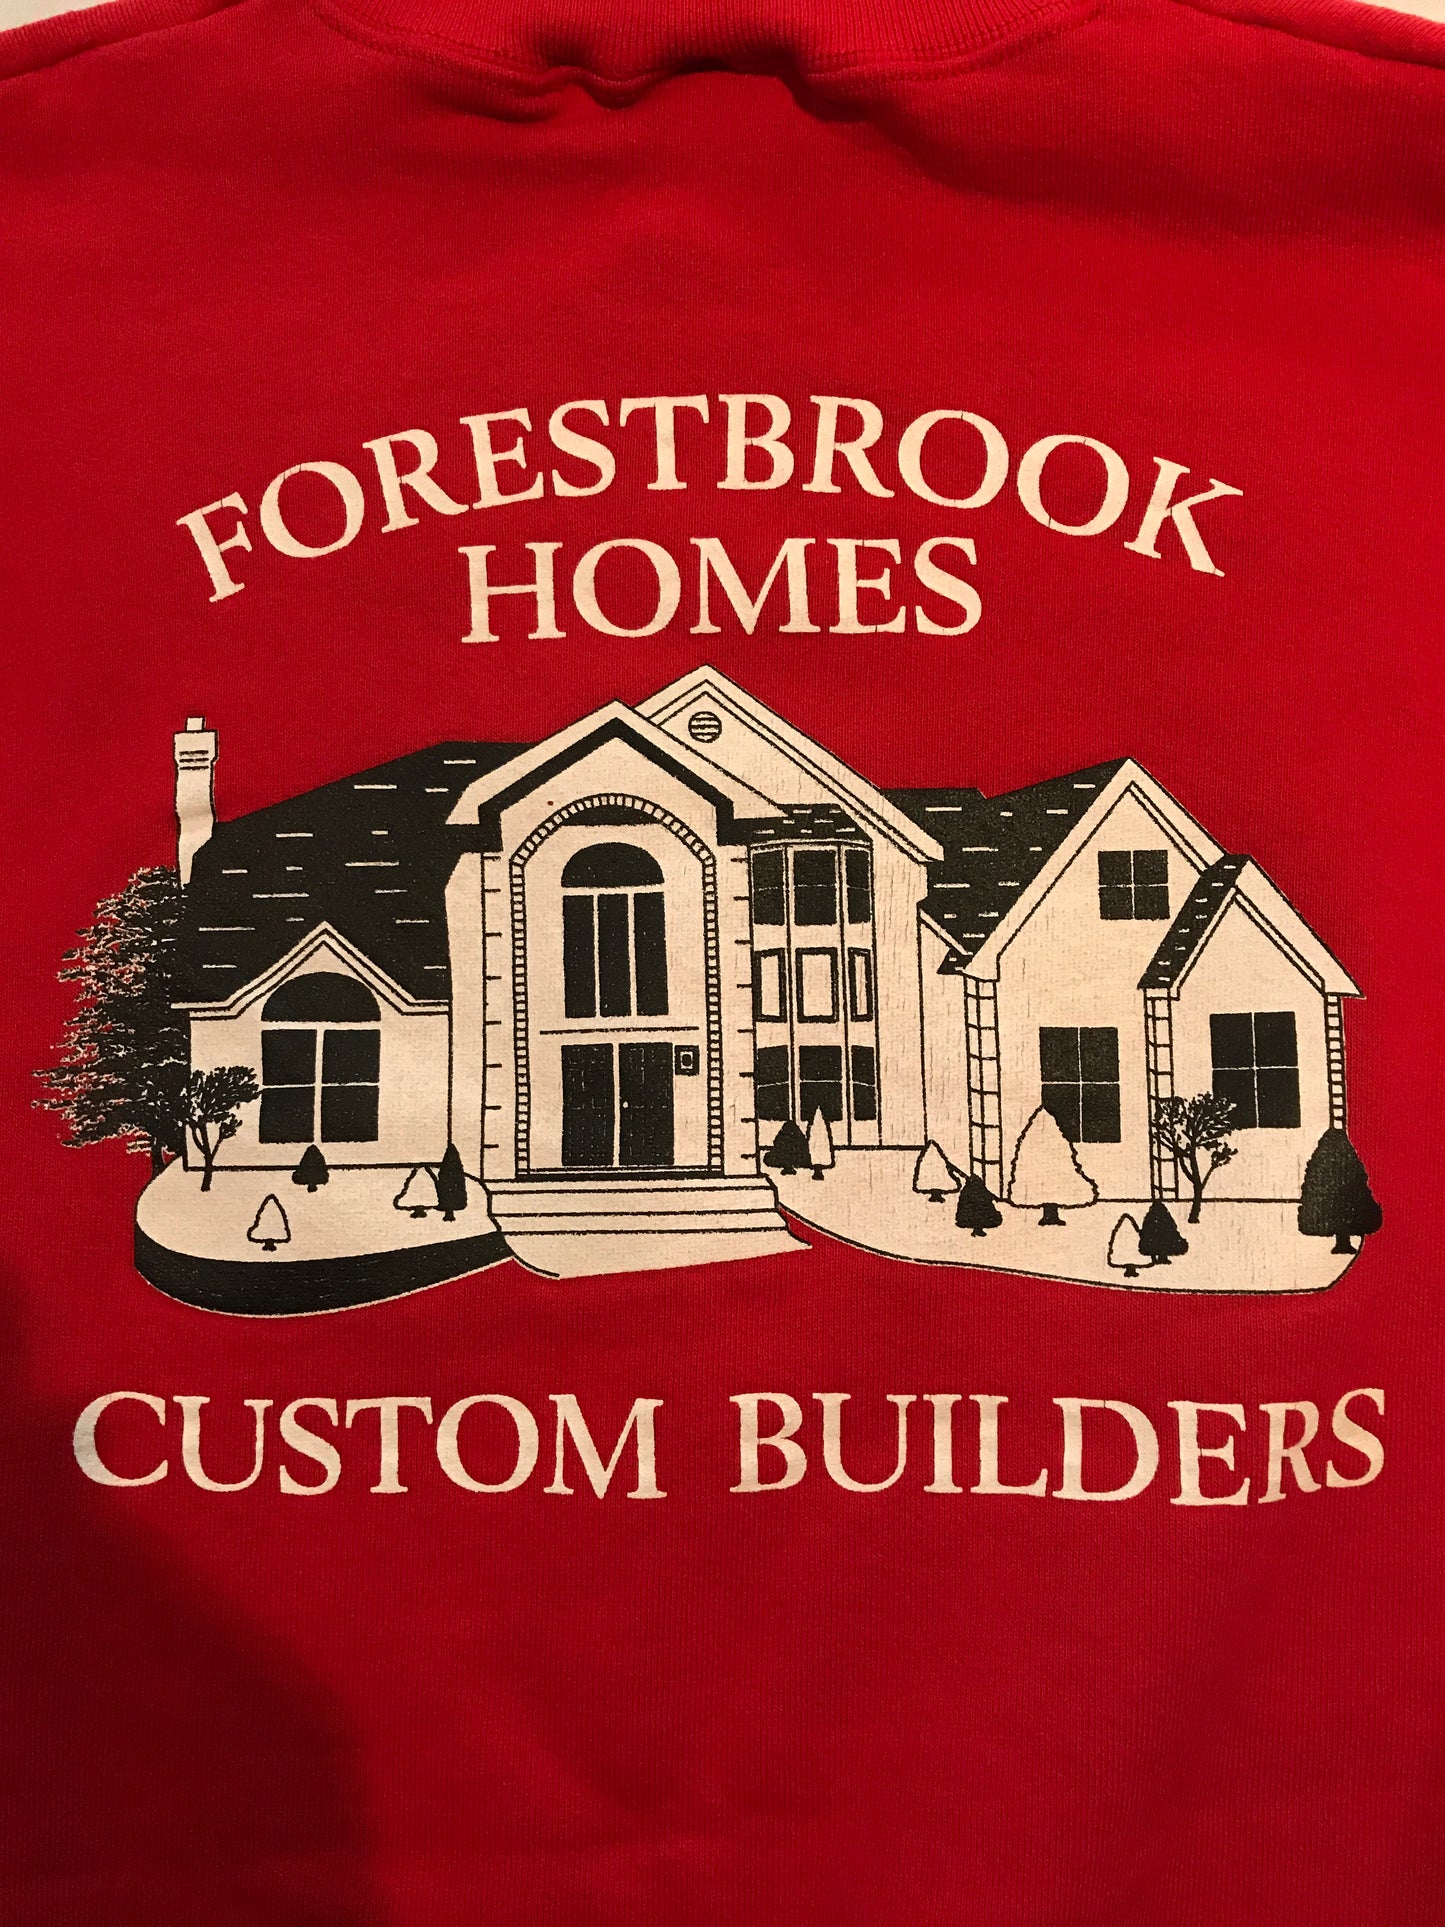 Homes Vintage Sweatshirt